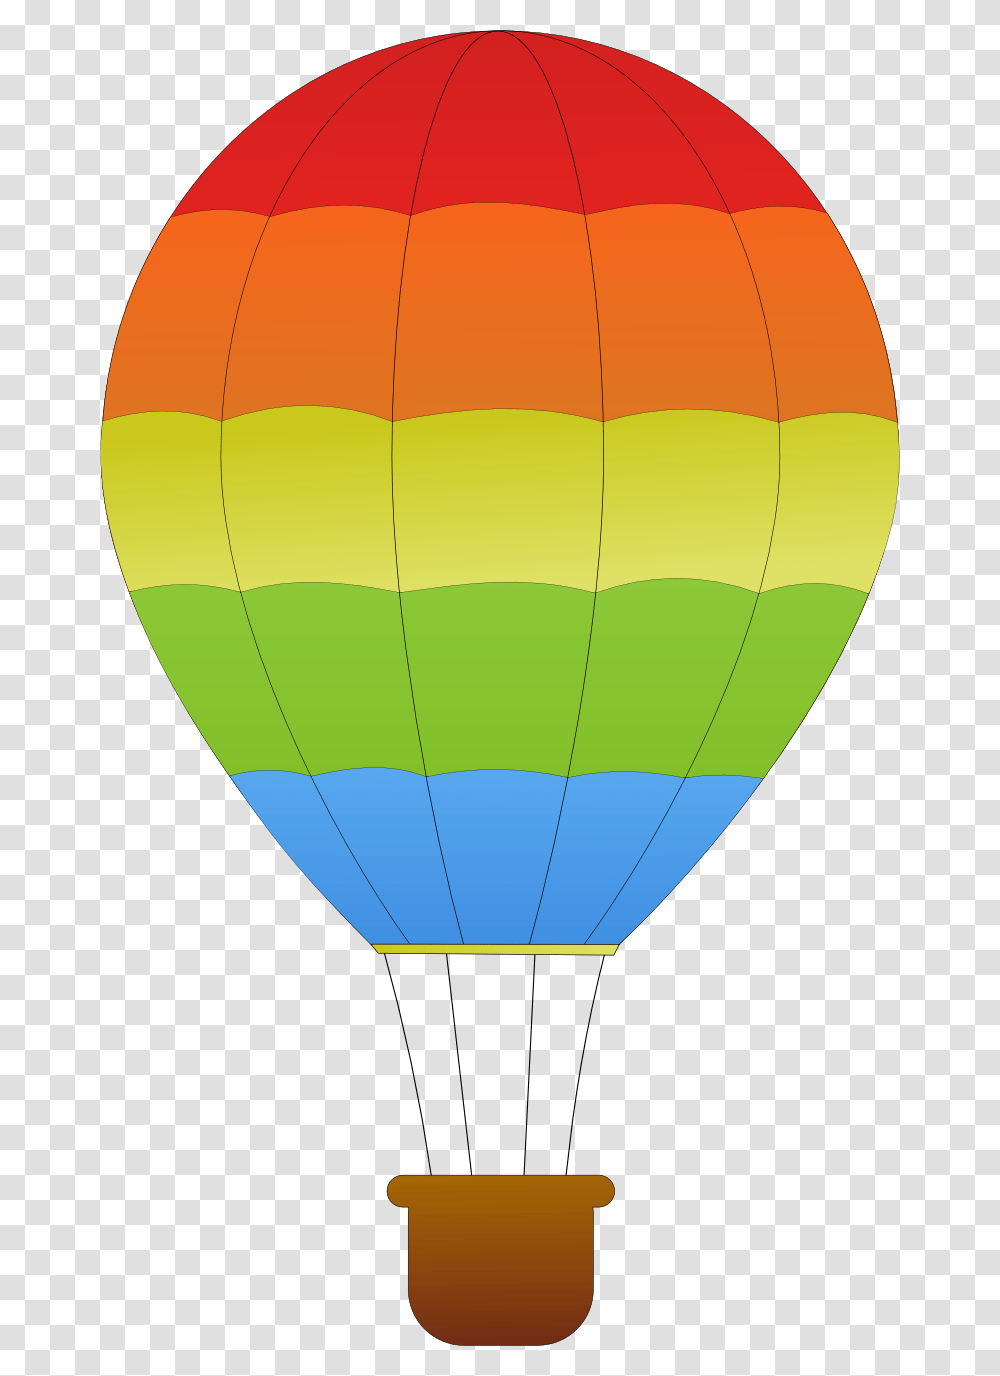 Horizontal Striped Hot Air Balloons, Aircraft, Vehicle, Transportation, Soccer Ball Transparent Png